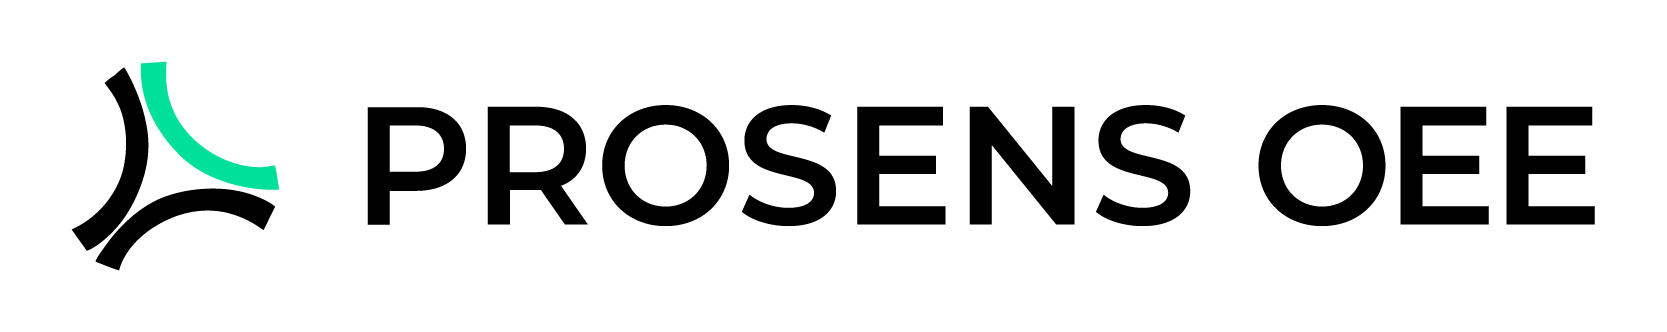 PROSENS OEE logo